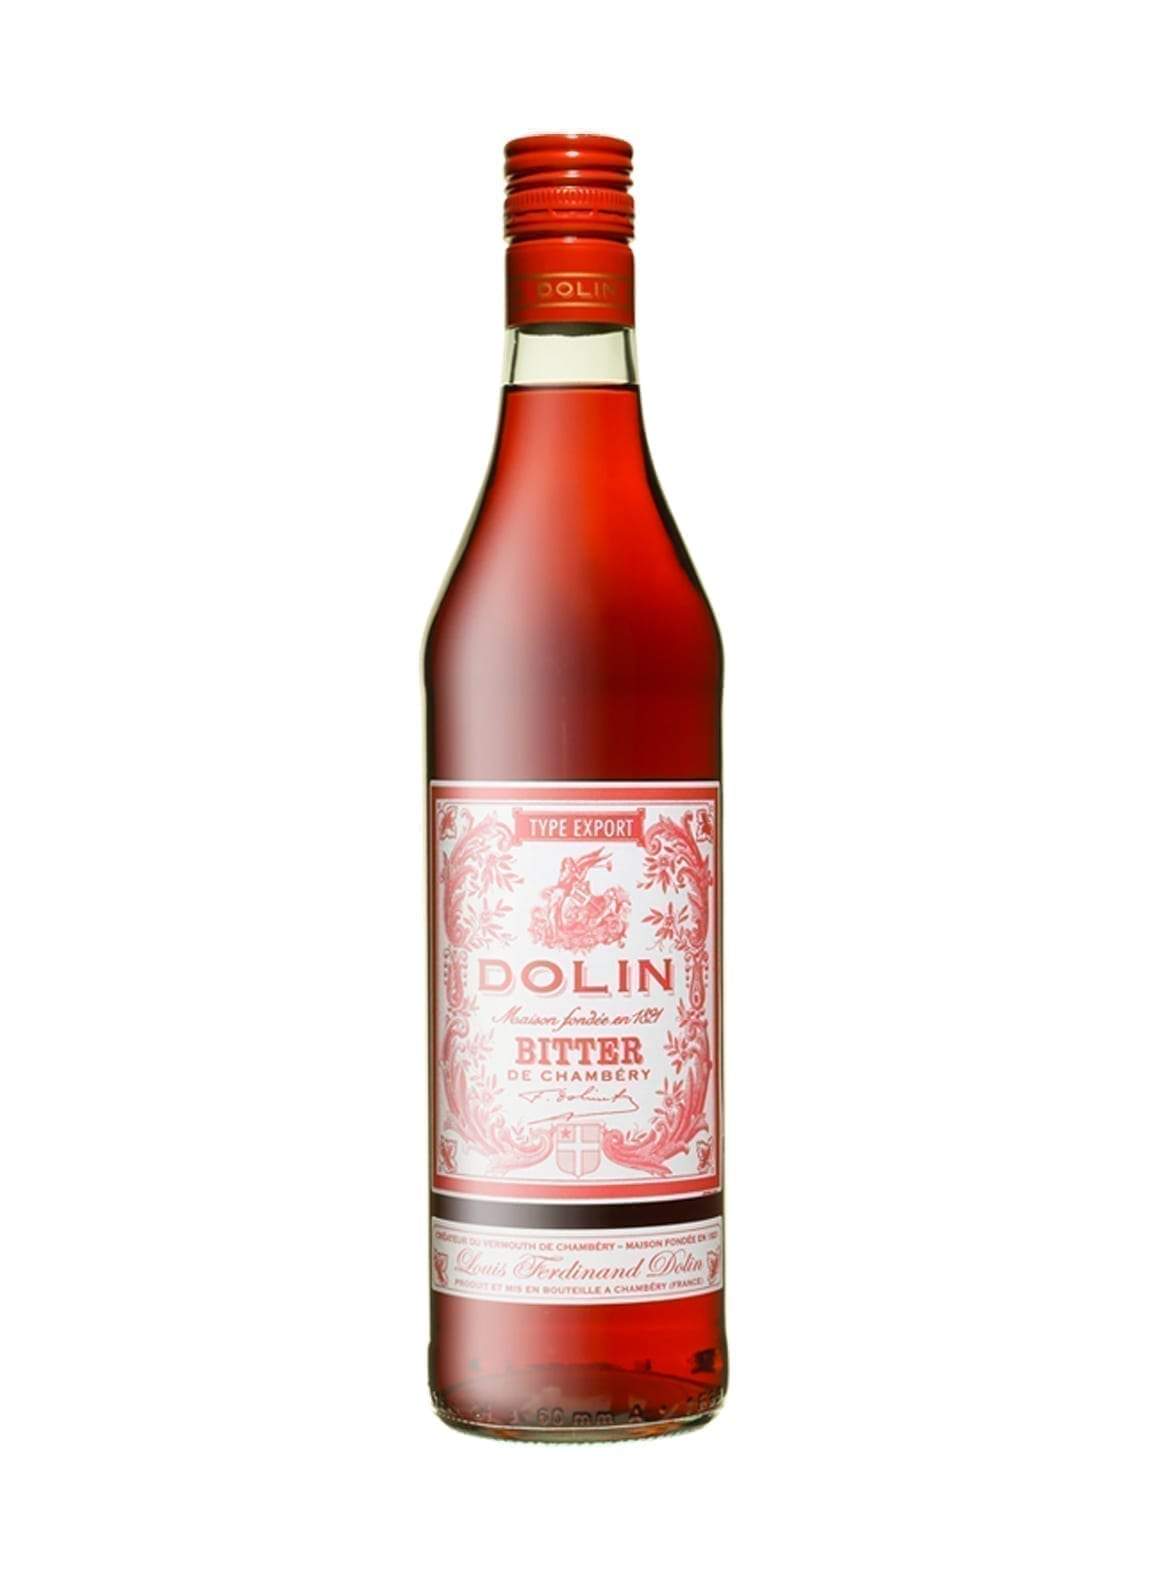 Dolin Bitter de Chambery 16% 750ml | Bitters | Shop online at Spirits of France